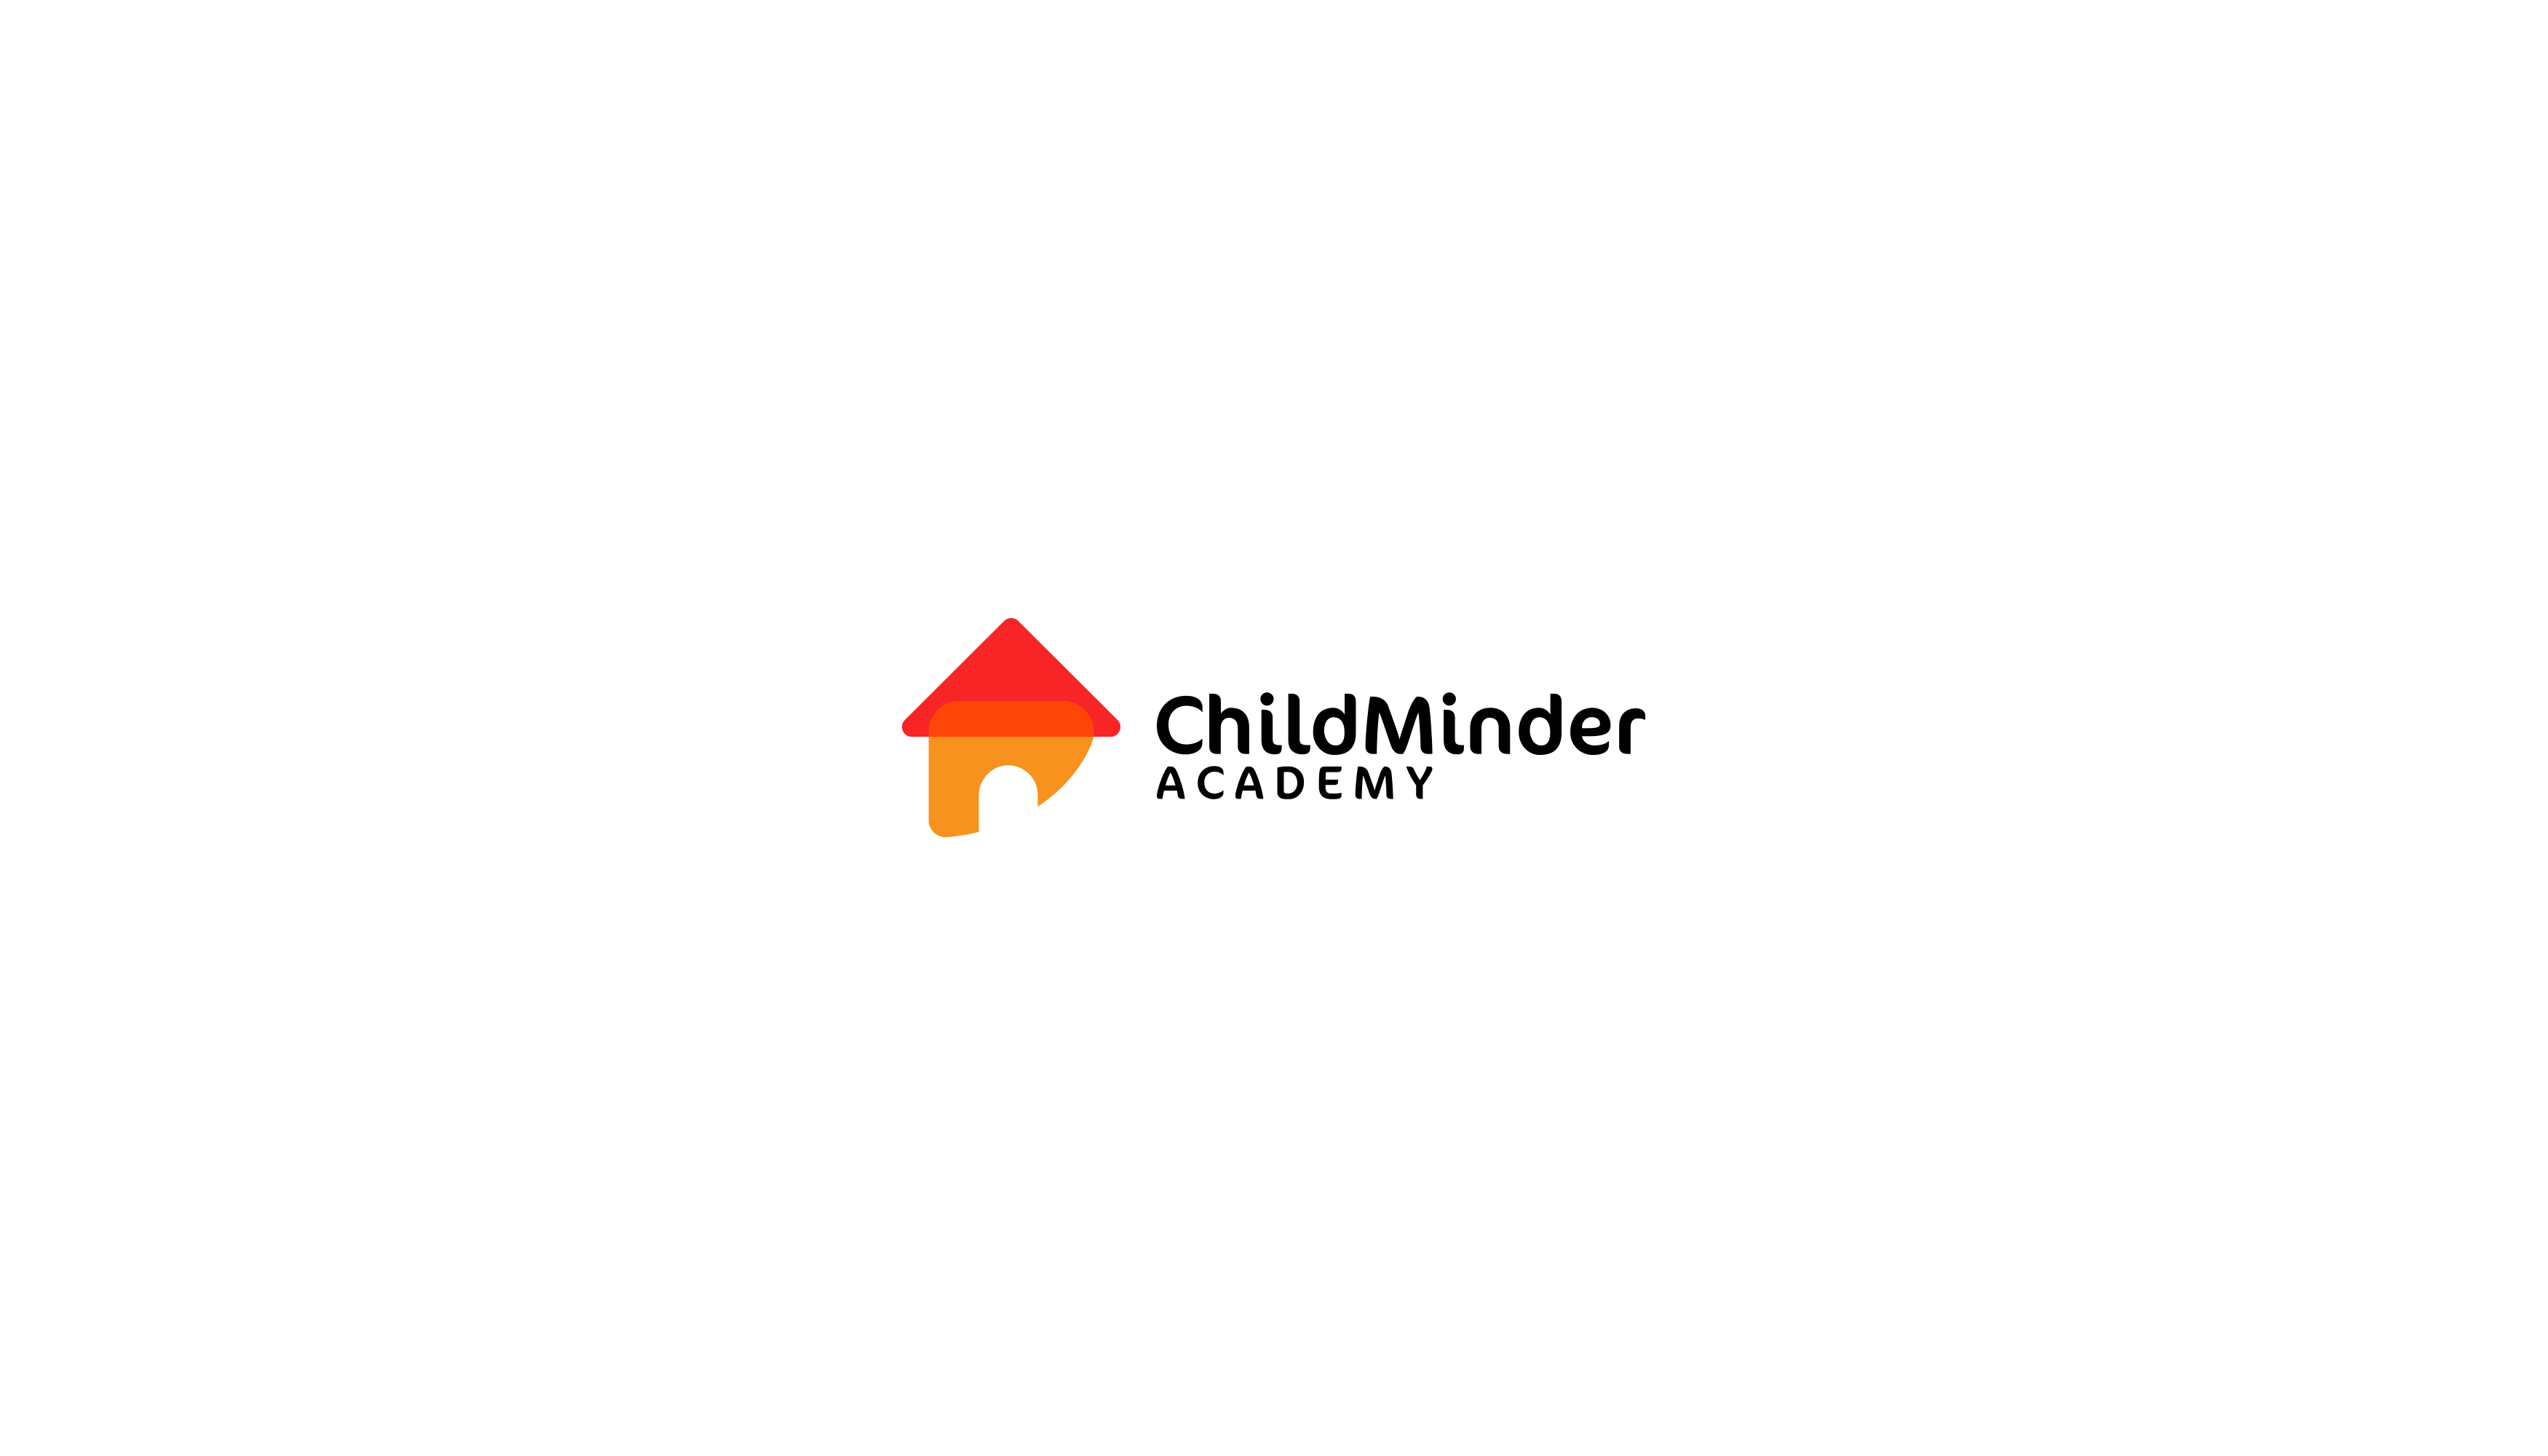 ChildMinder Academy Design #6